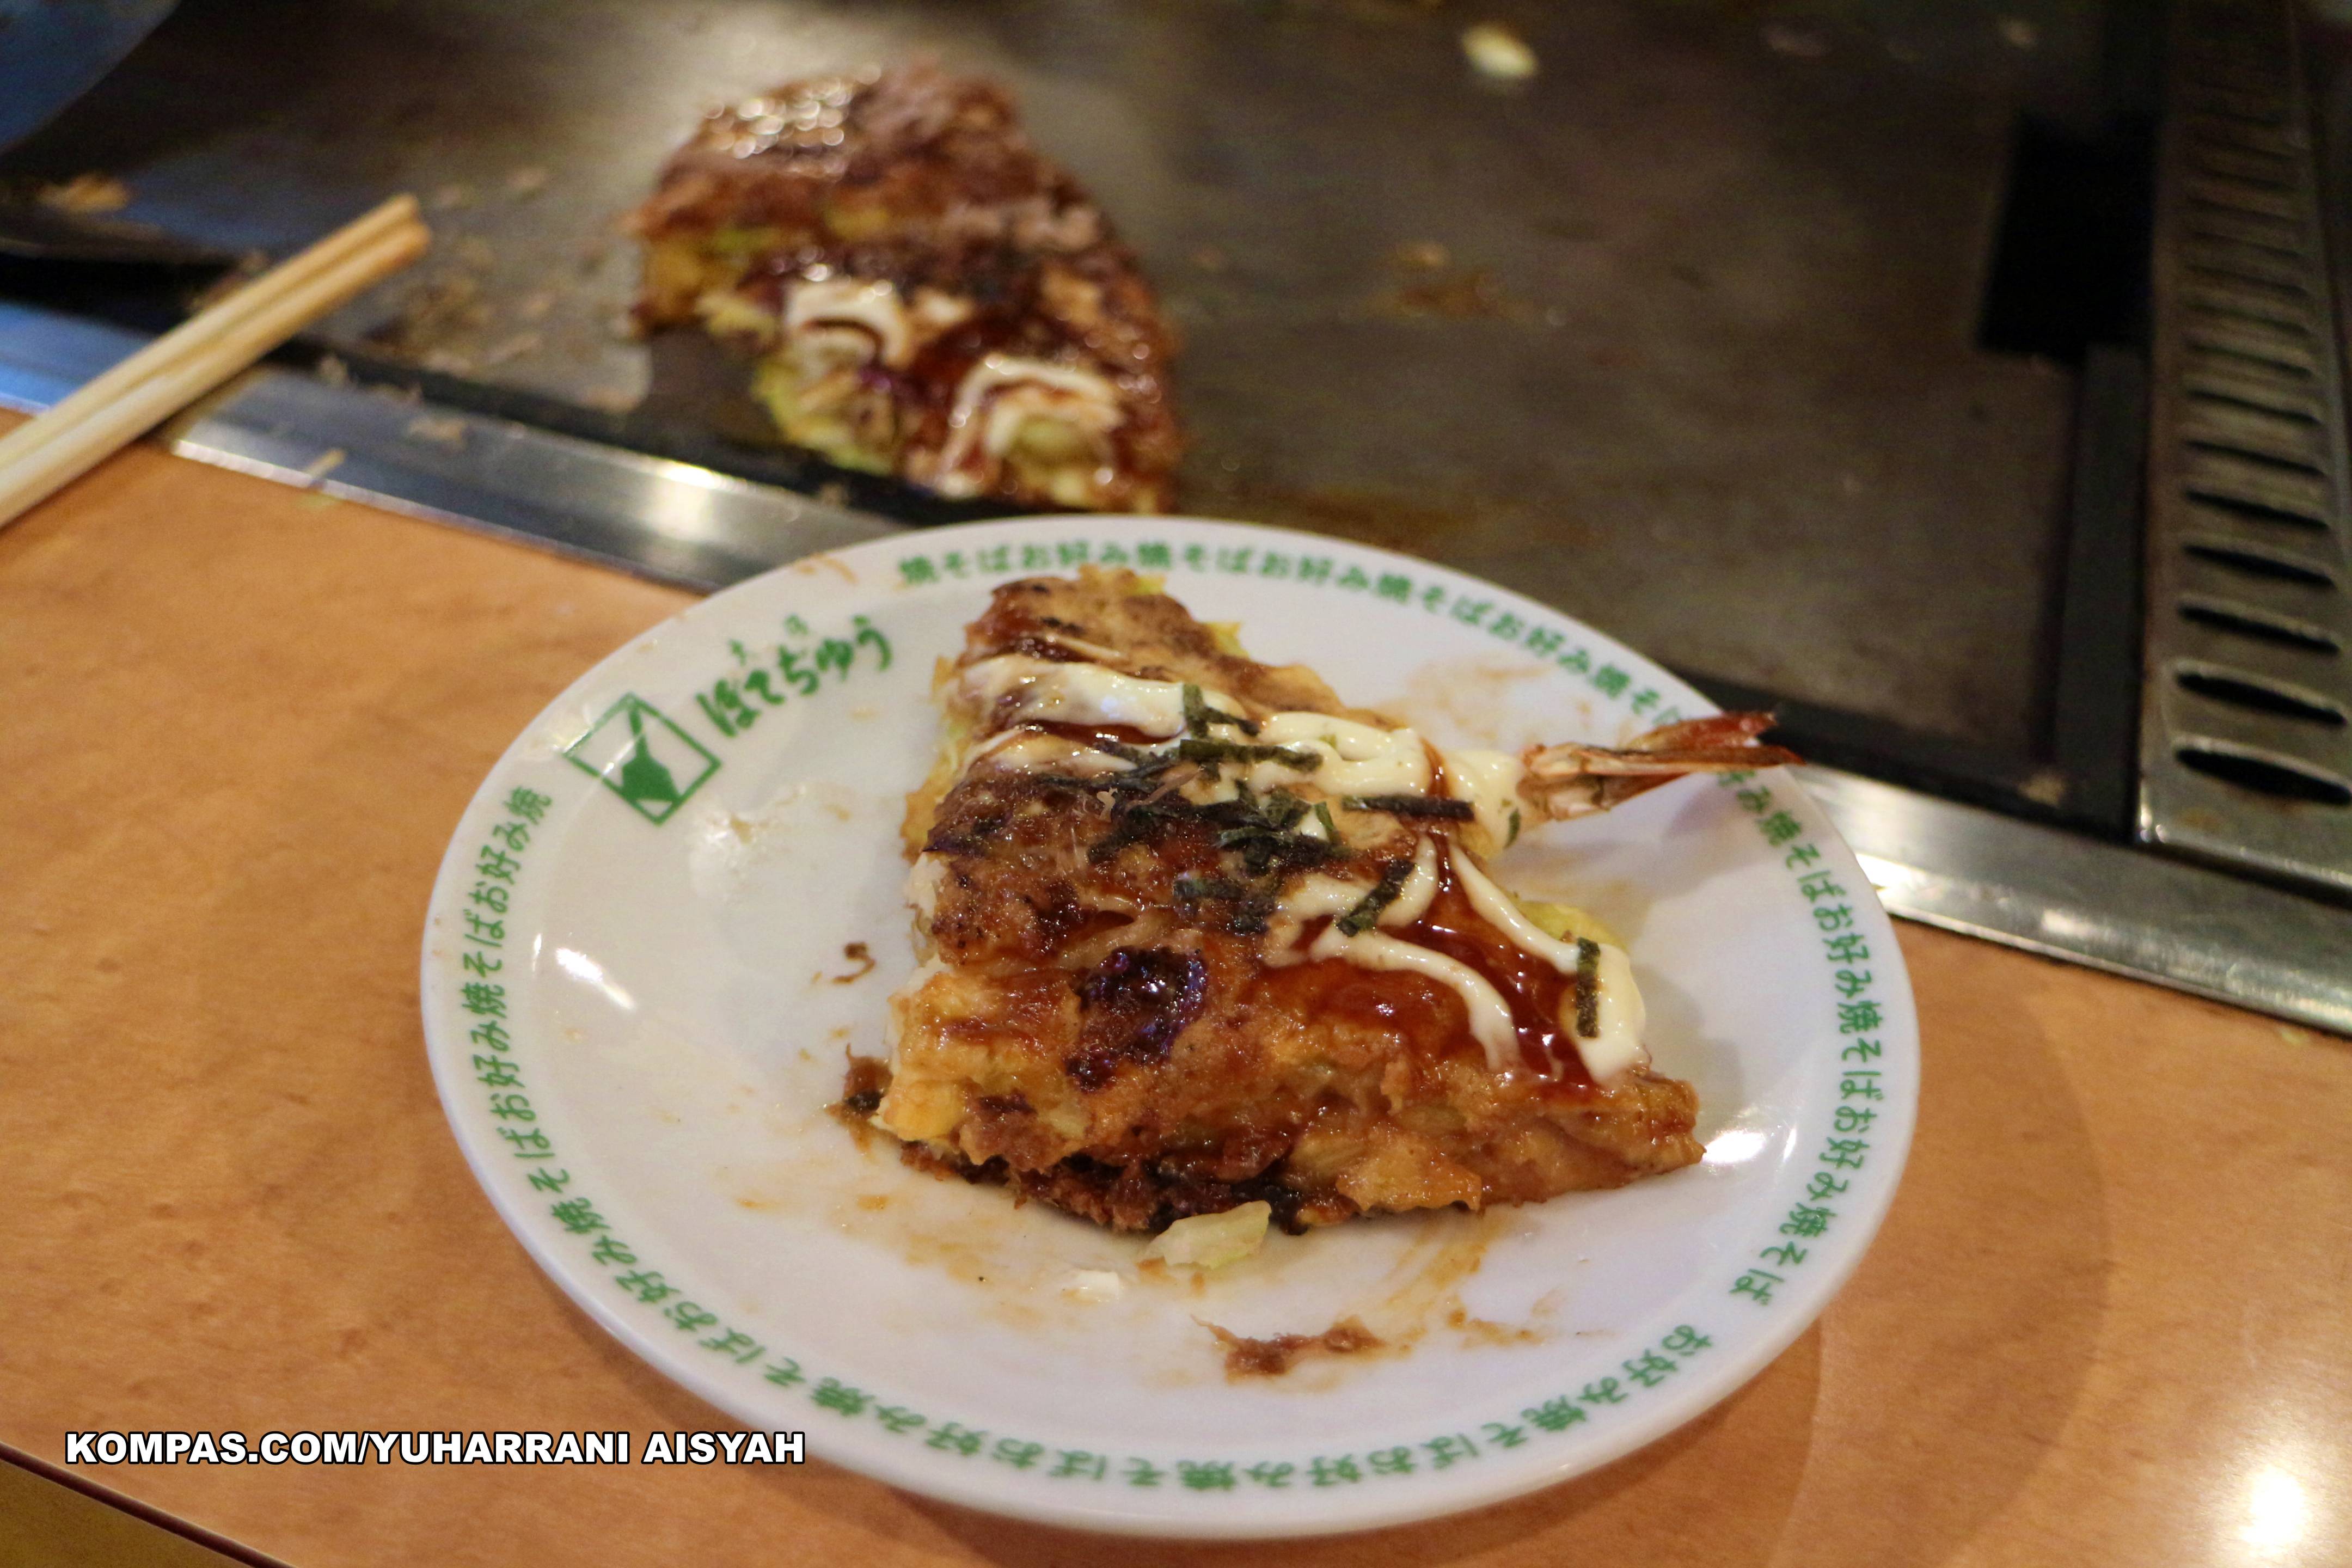 Tekstur okonomiyaki khas Jepang ini empuk dan mengembang, rasanya gurih dengan sedikit sentuhan manis. (KOMPAS.COM/YUHARRANI AISYAH)